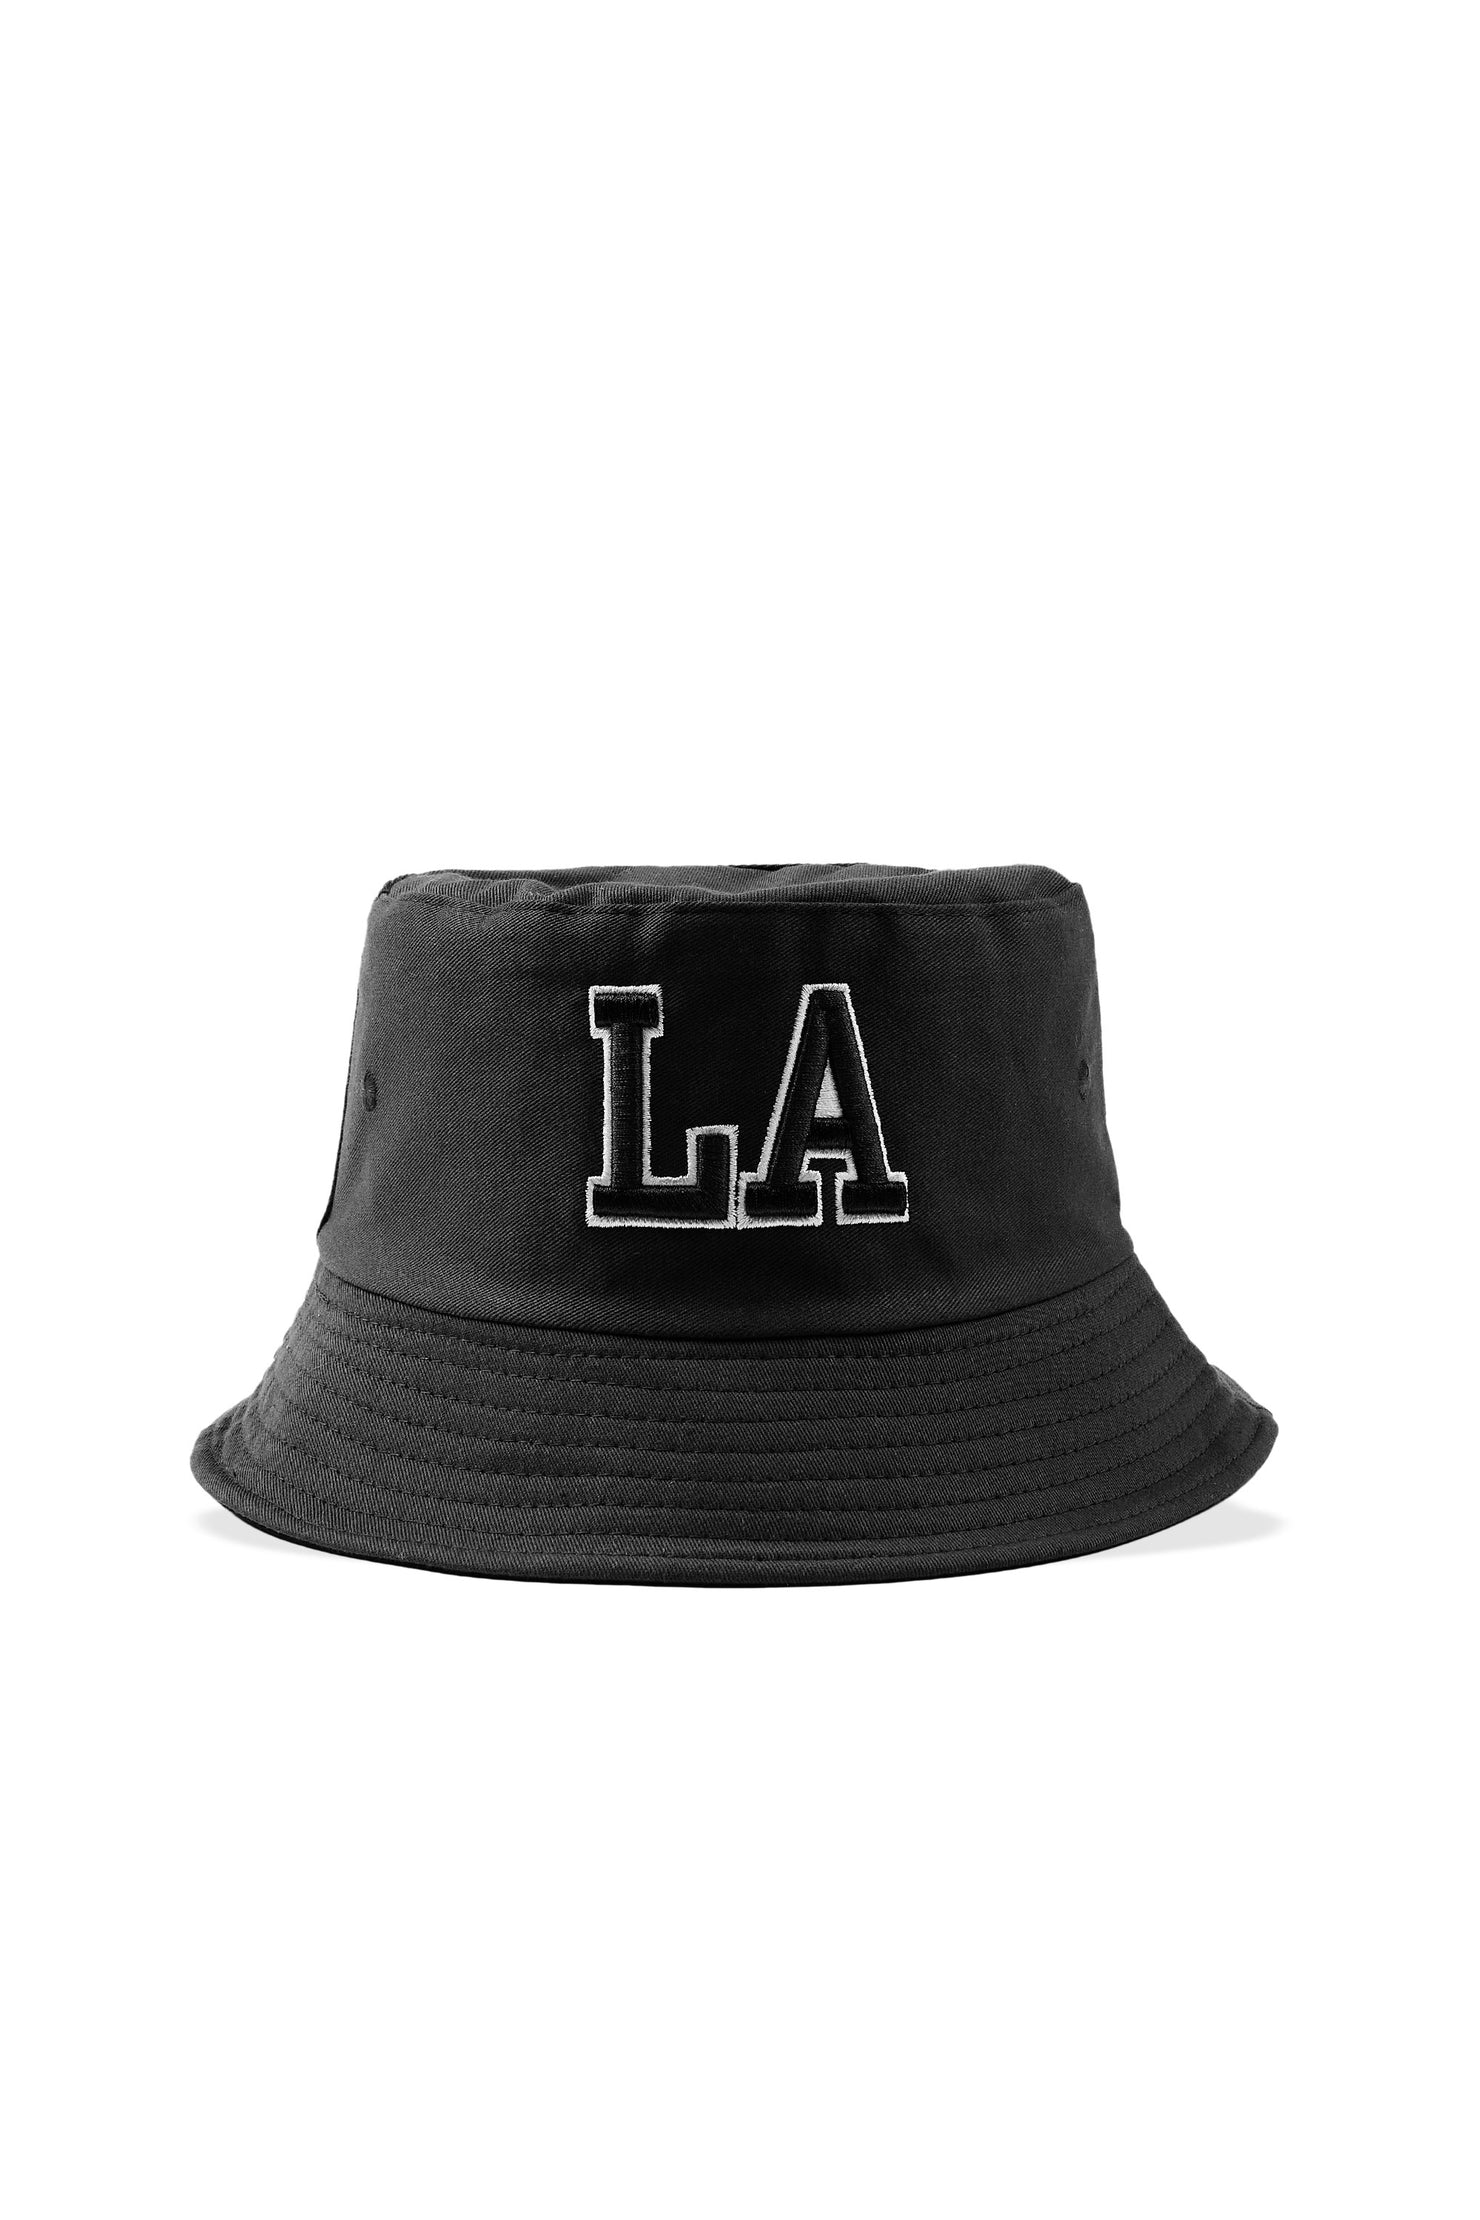 Boys LA Black Bucket Hat